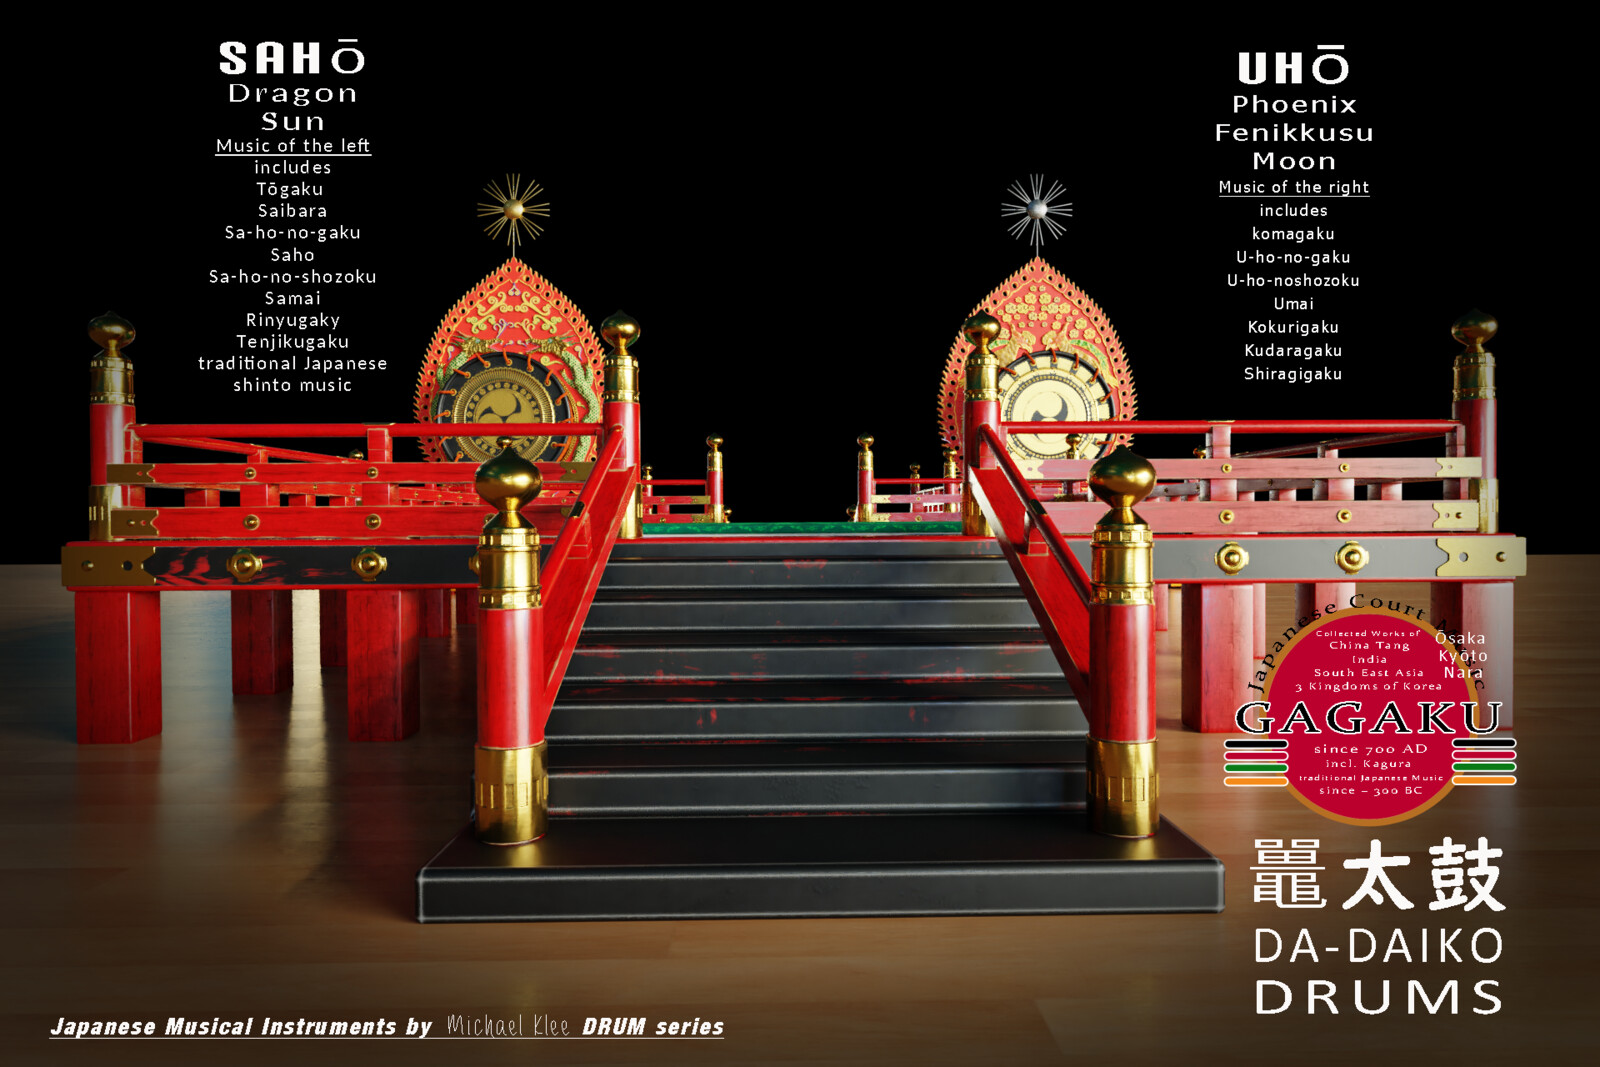 Da-daiko 鼉太鼓 Japanese giant drums for the gagaku 雅楽 court music - gagaku stage walk in 2